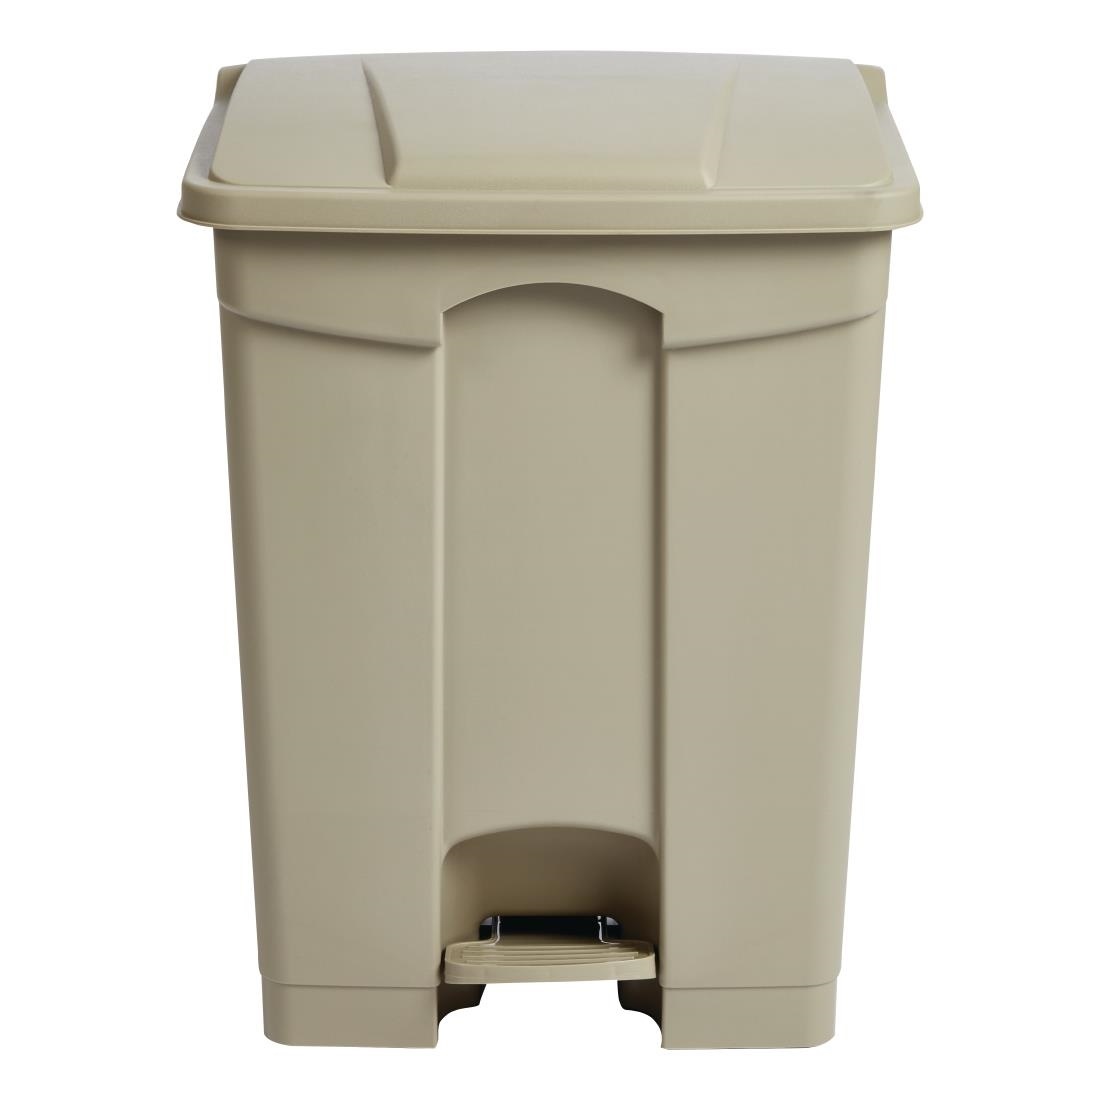 Jantex pedaal afvalbakken 65L beige